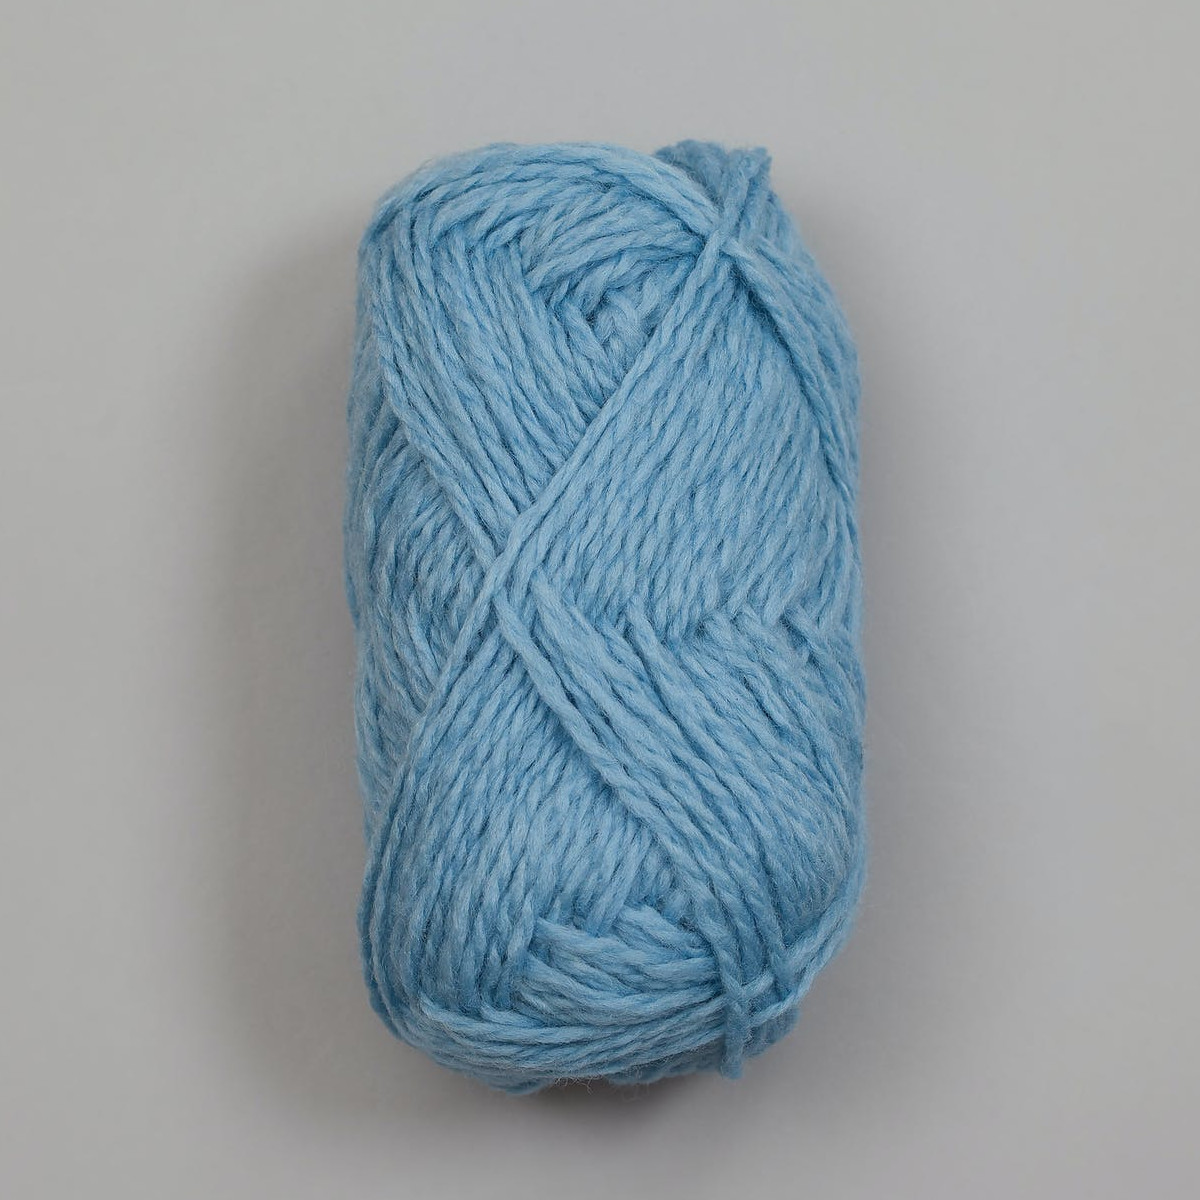 Vams - Lys jeansblå / Helles Jeansblau (50)